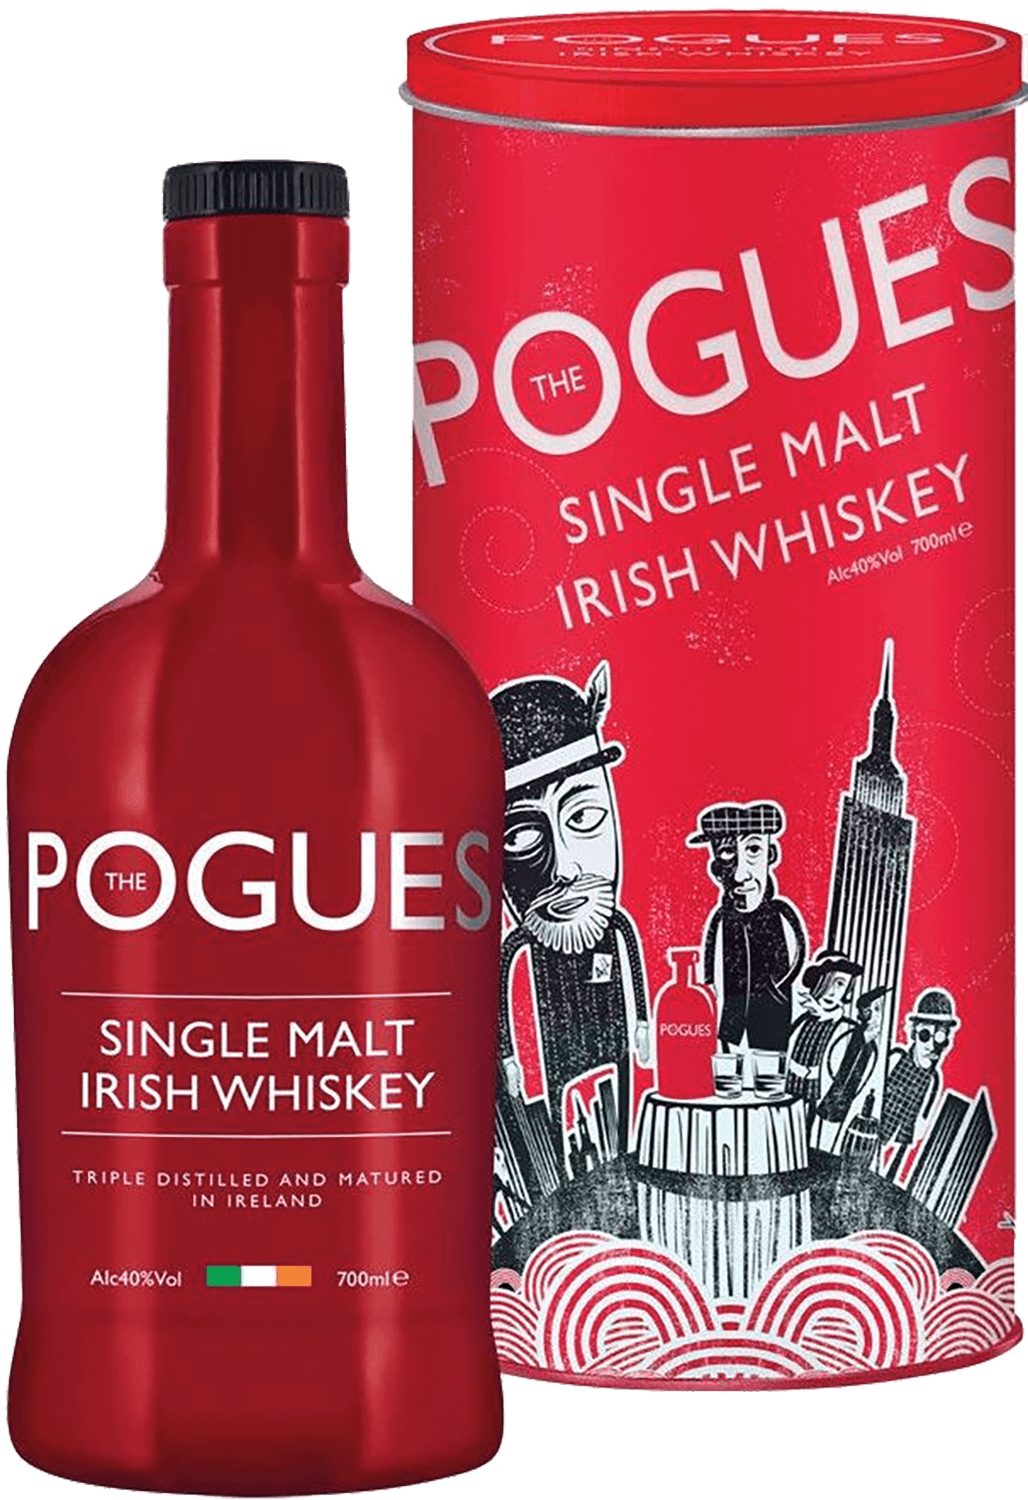 Pogues Single Malt Irish Whiskey (gift box) west cork small batch rum cask finished single malt irish whiskey